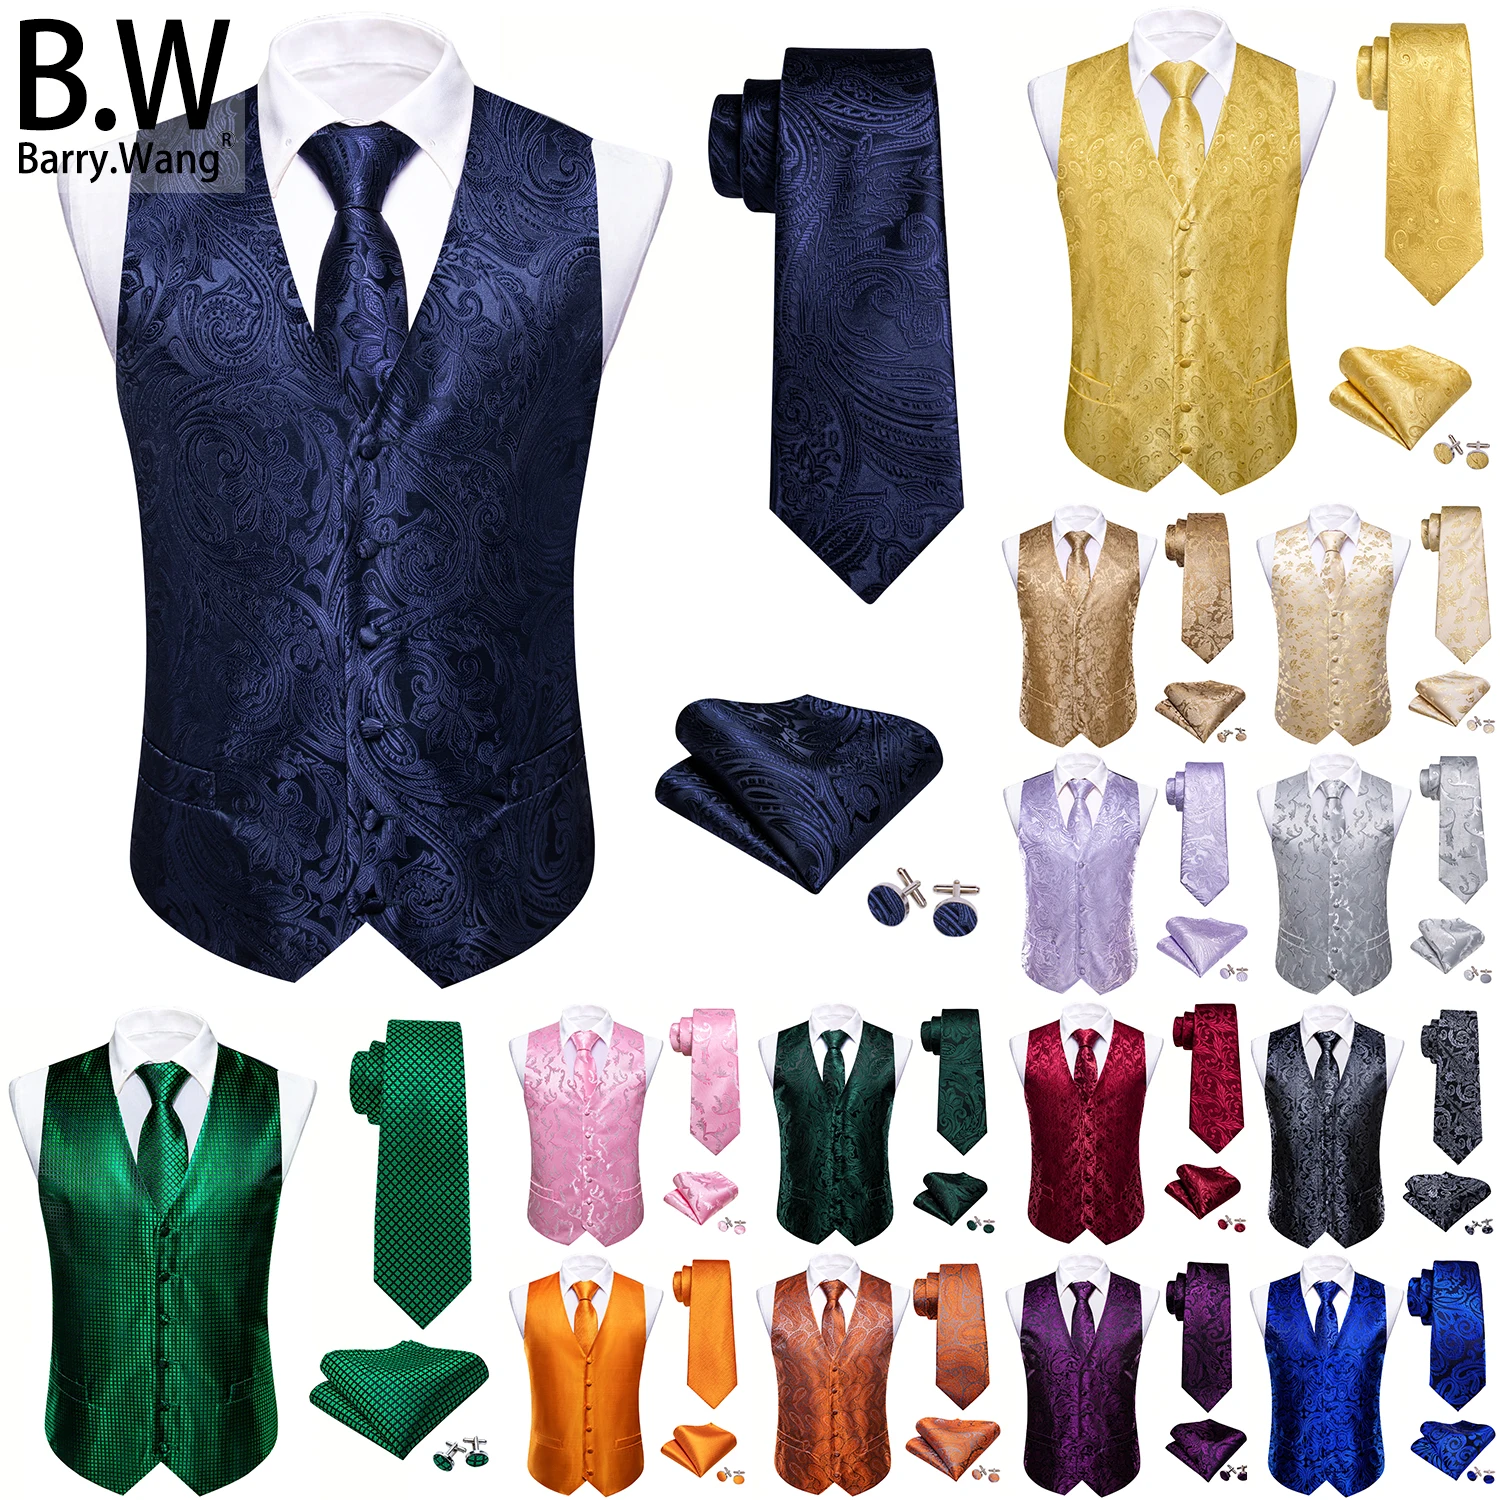 

Barry.Wang 100 Colors Silk Men Vest Jacquard Paisley Floral Waistcoat Tie Hanky Cufflinks Set Sleeveless Jacket Wedding Business